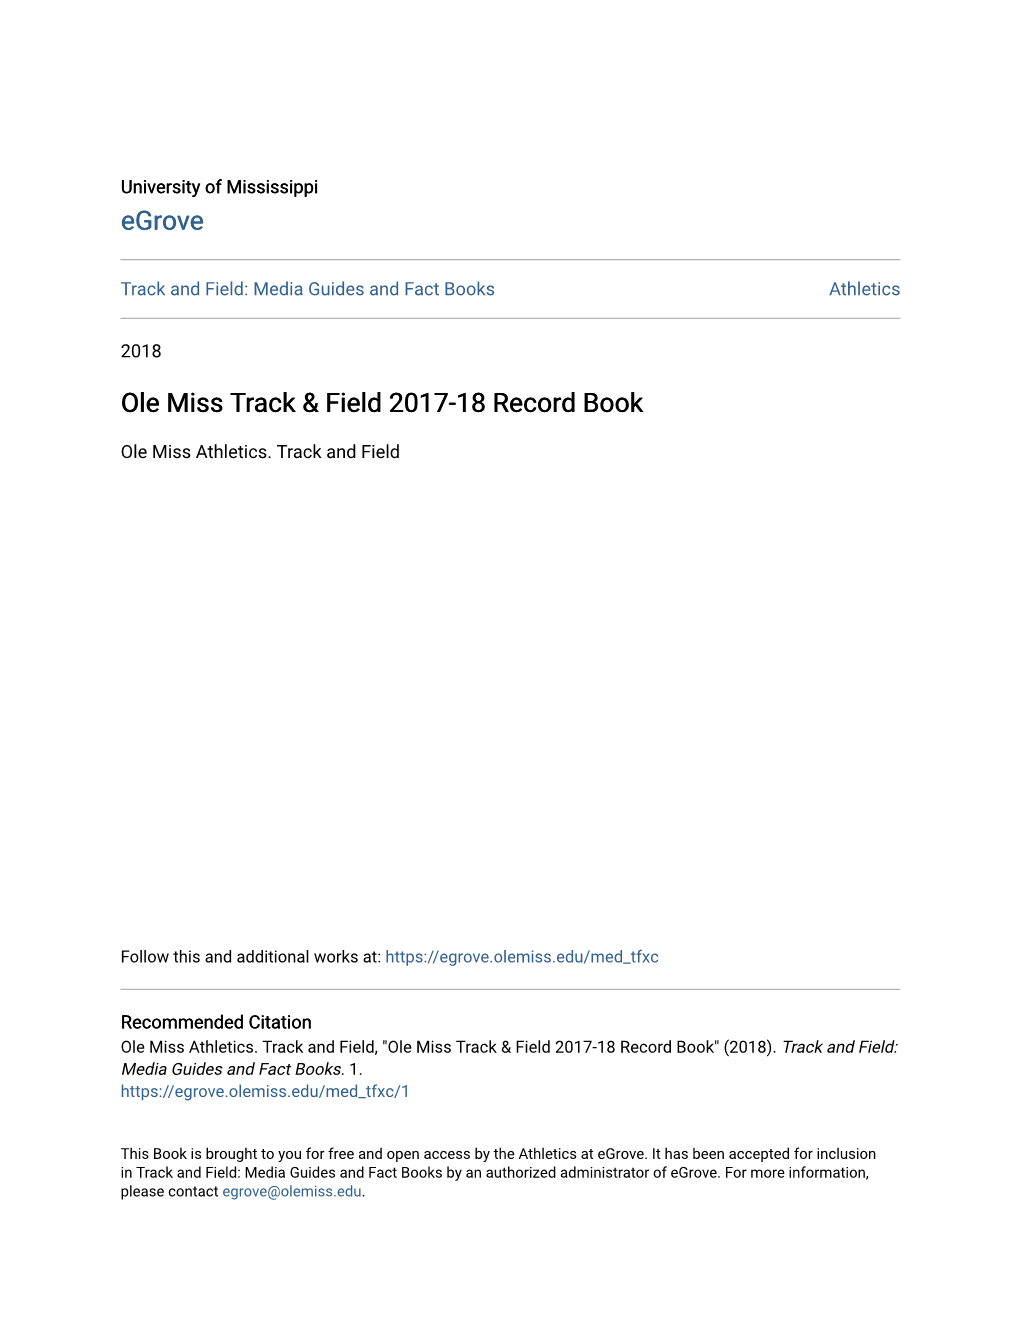 Ole Miss Track & Field 2017-18 Record Book